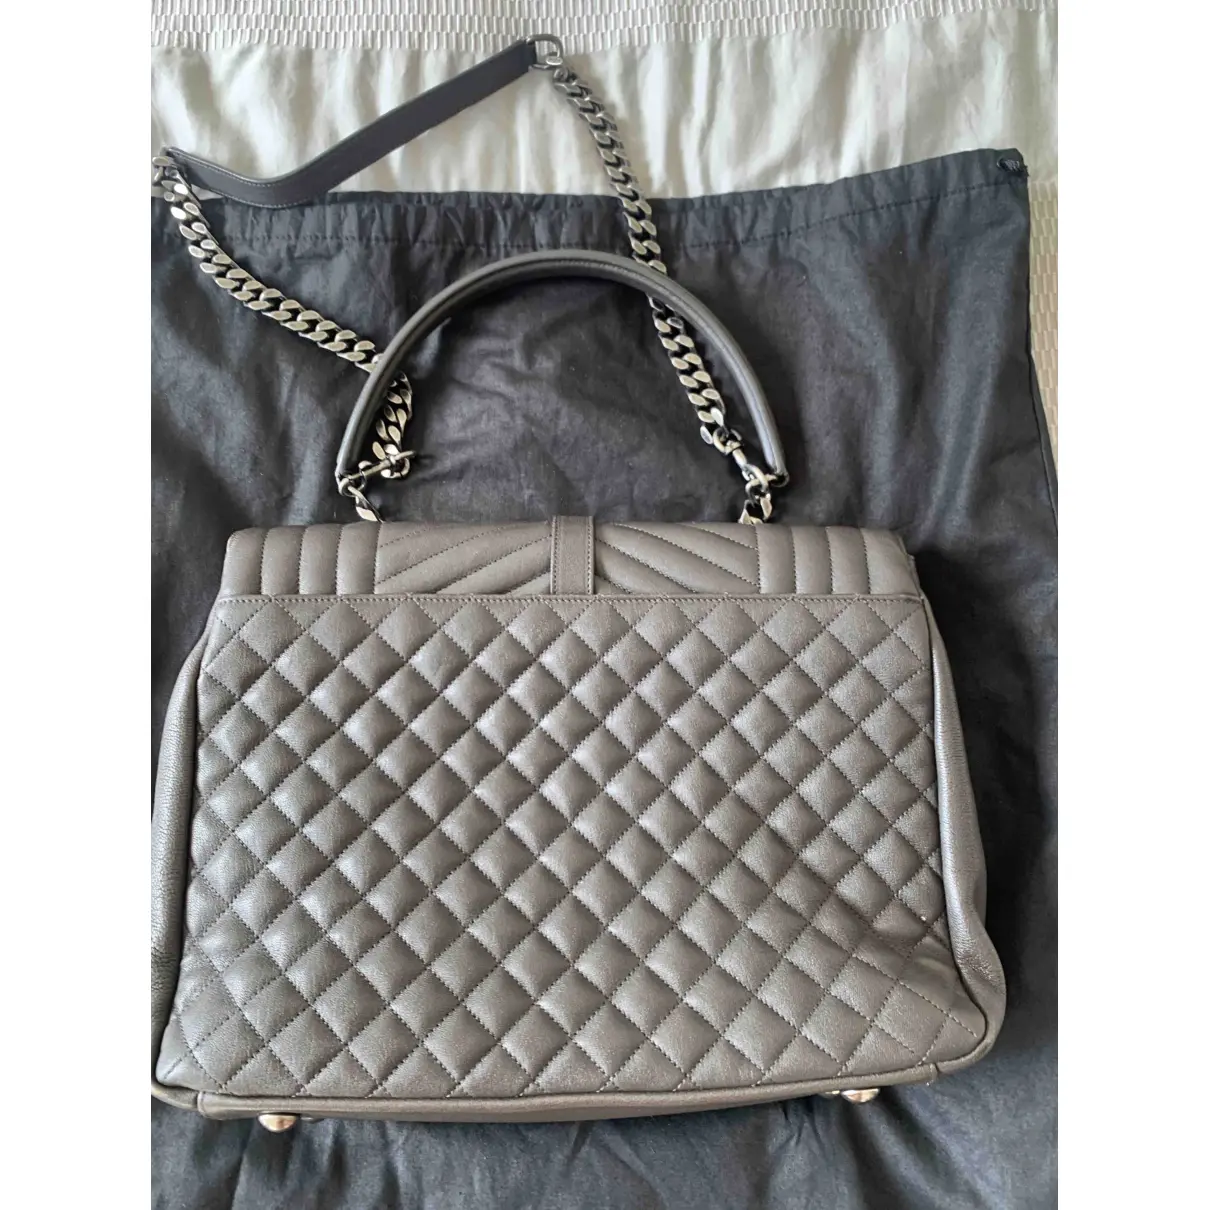 Buy Saint Laurent Collége monogramme leather handbag online